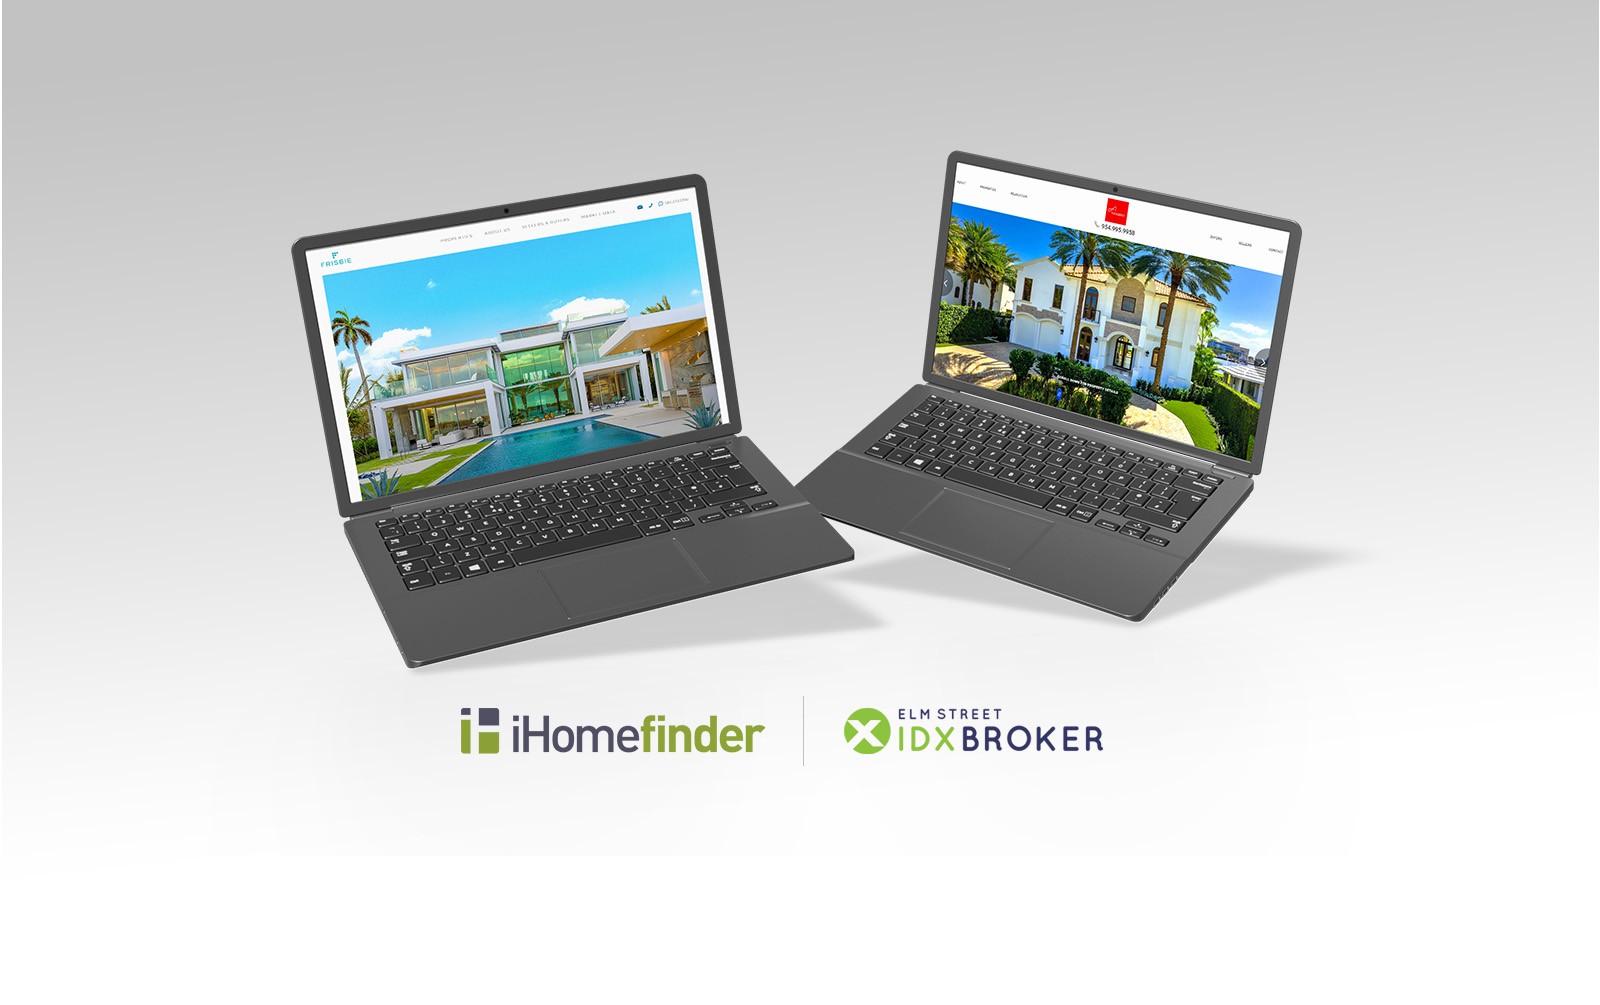 iHomefinder vs. IDX Broker: Which IDX Real Estate Solution Is Best For You?